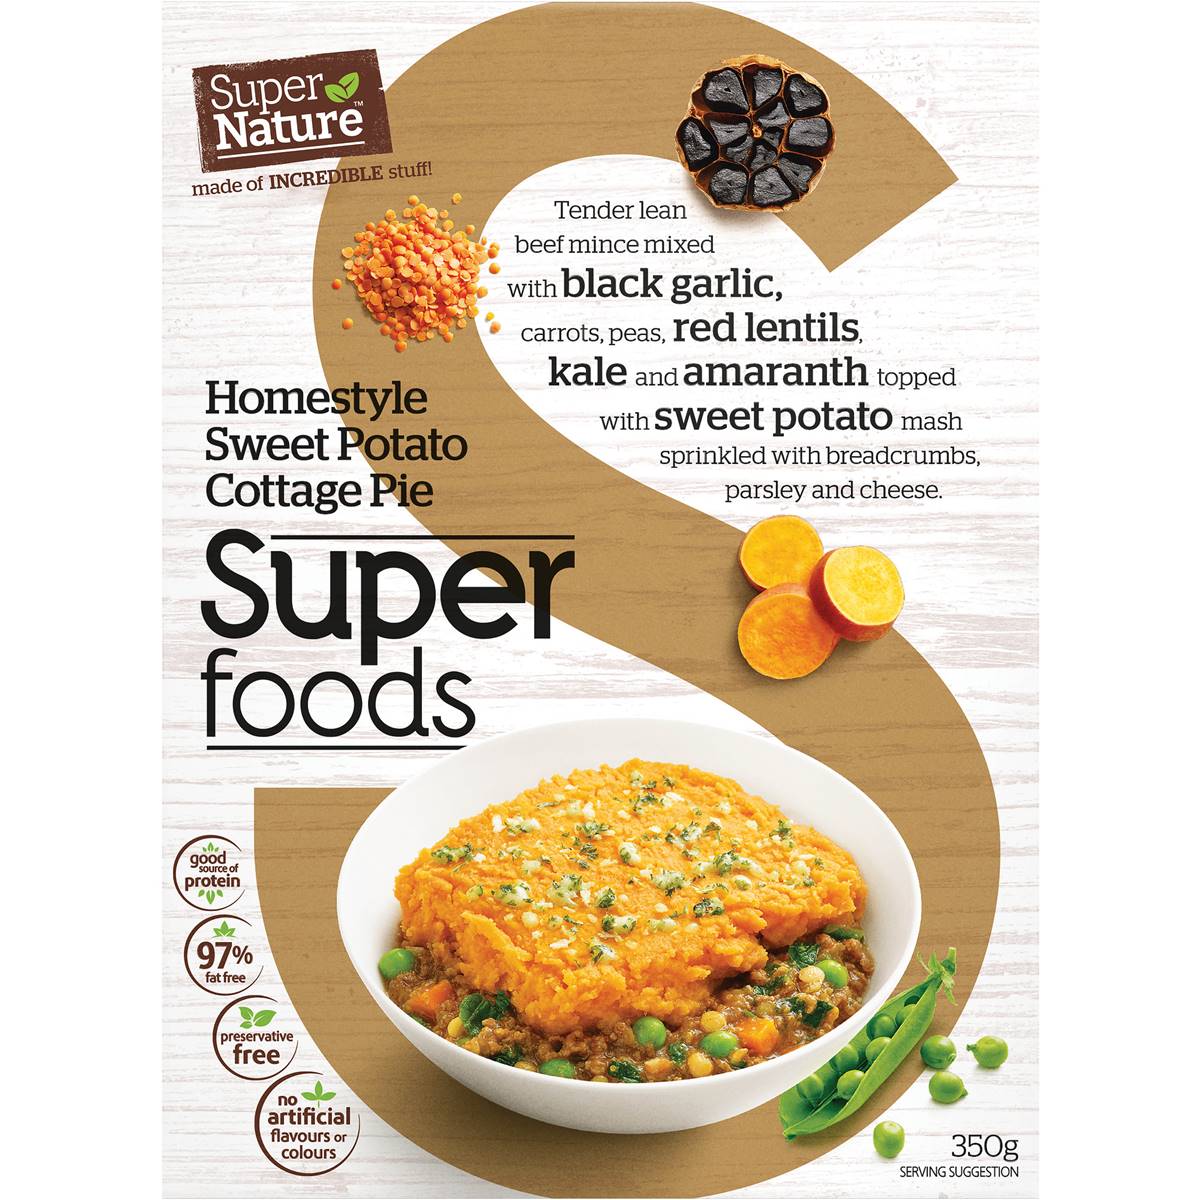 Calories in Super Nature Super Foods Sweet Potato Cottage Pie